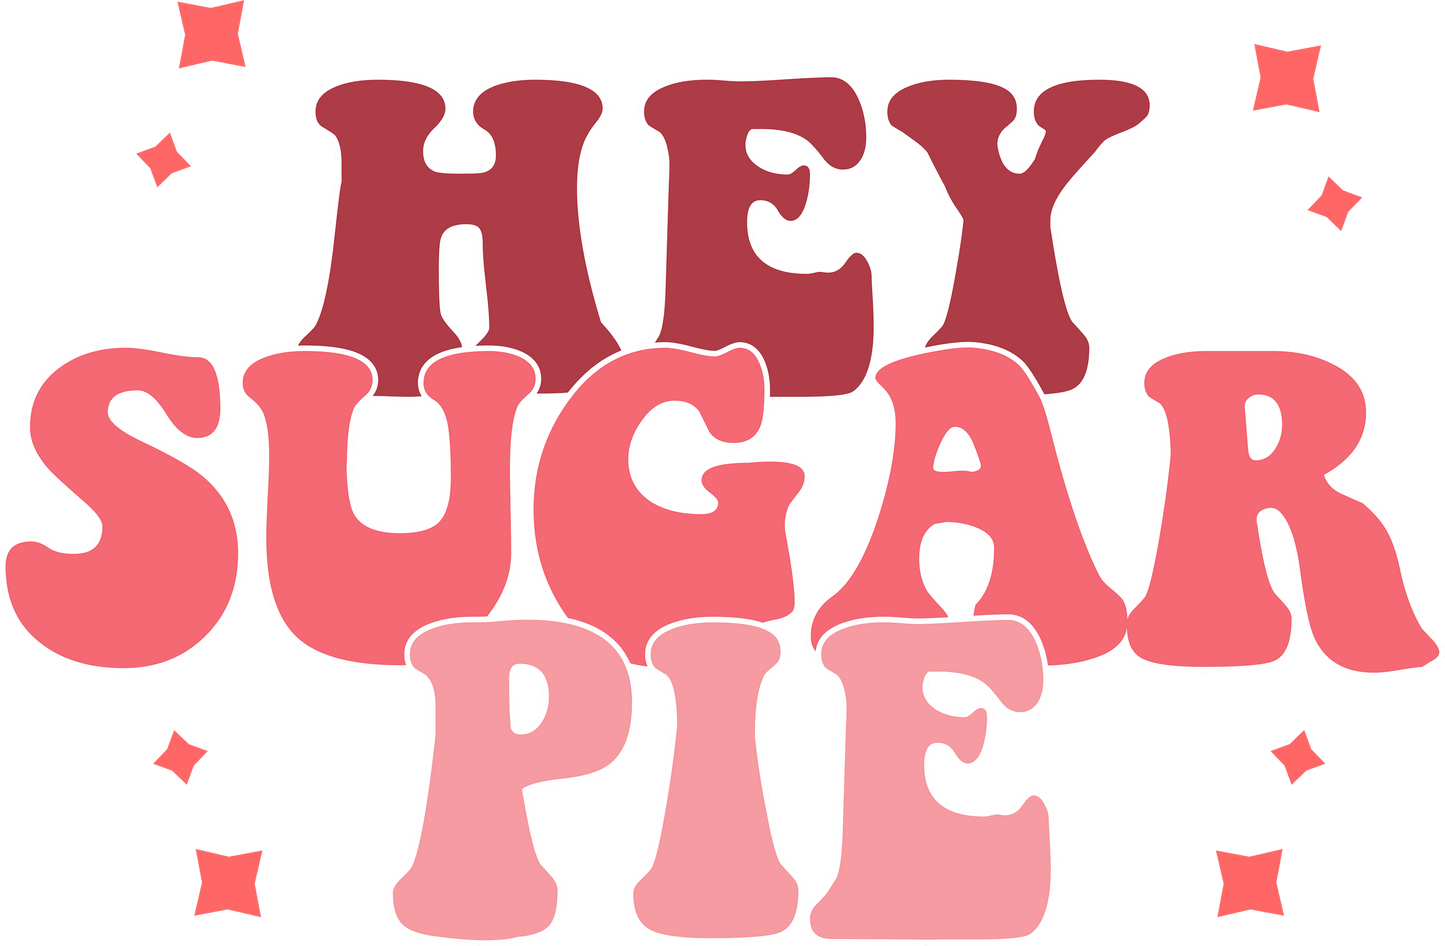 Hey Sugar Pie DTF